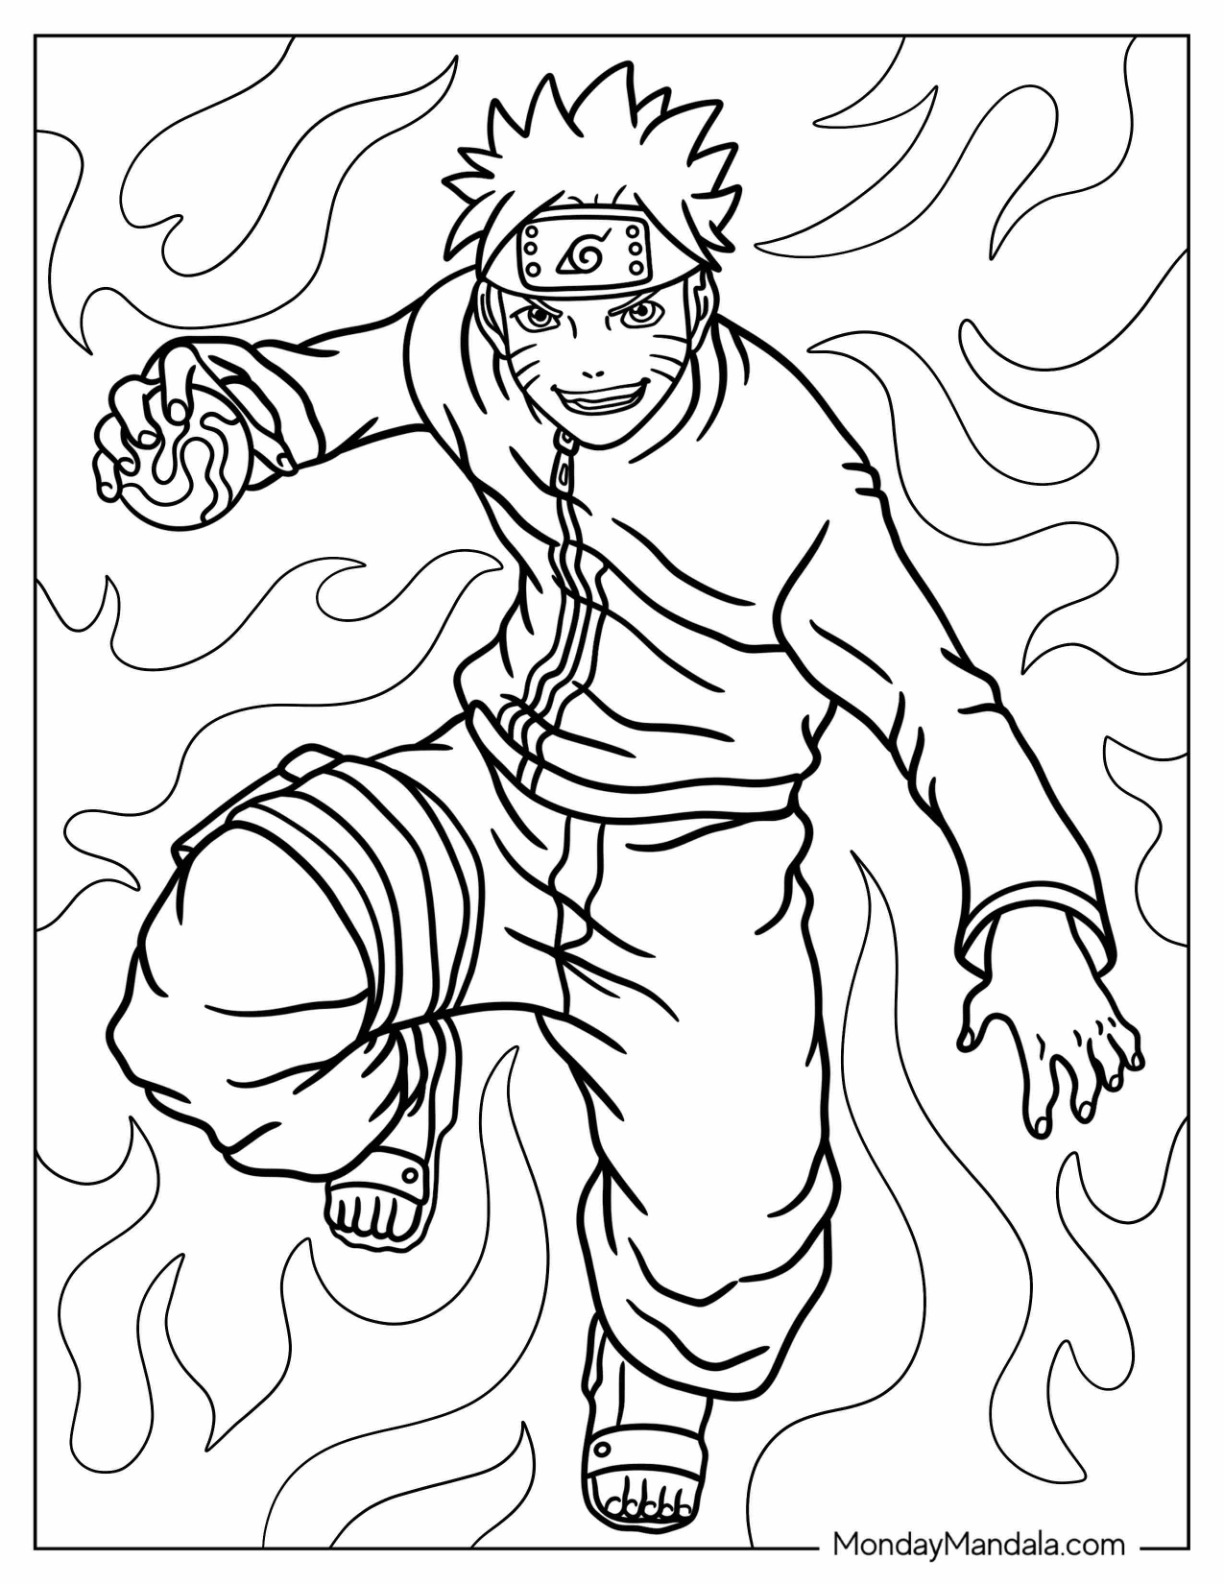 Naruto coloring pages free pdf printables